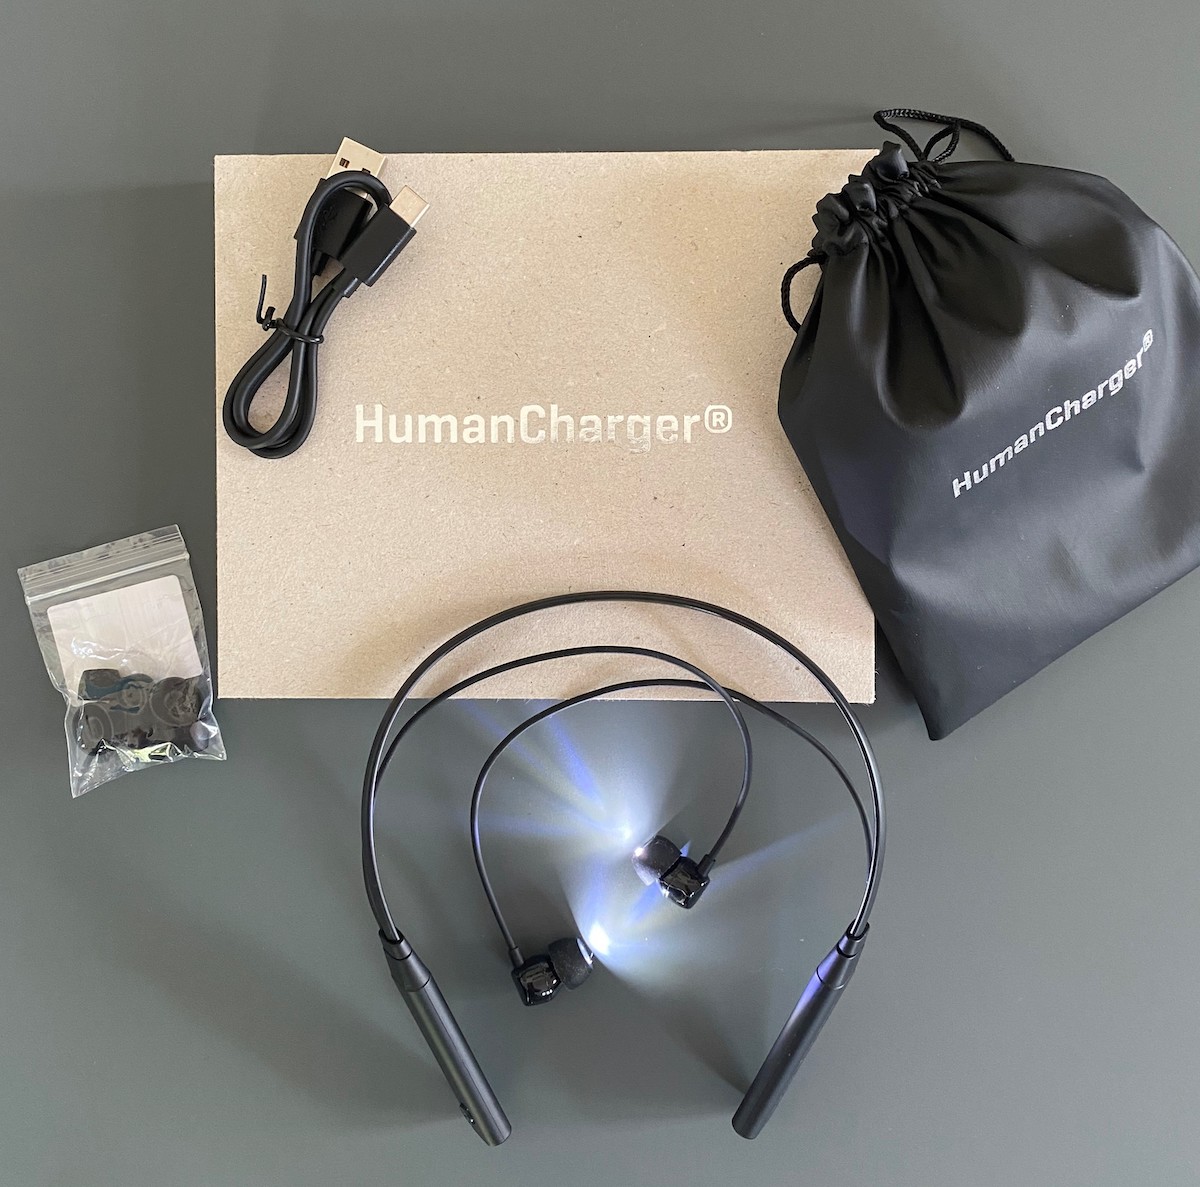 humancharger-bright-light-headset.jpg